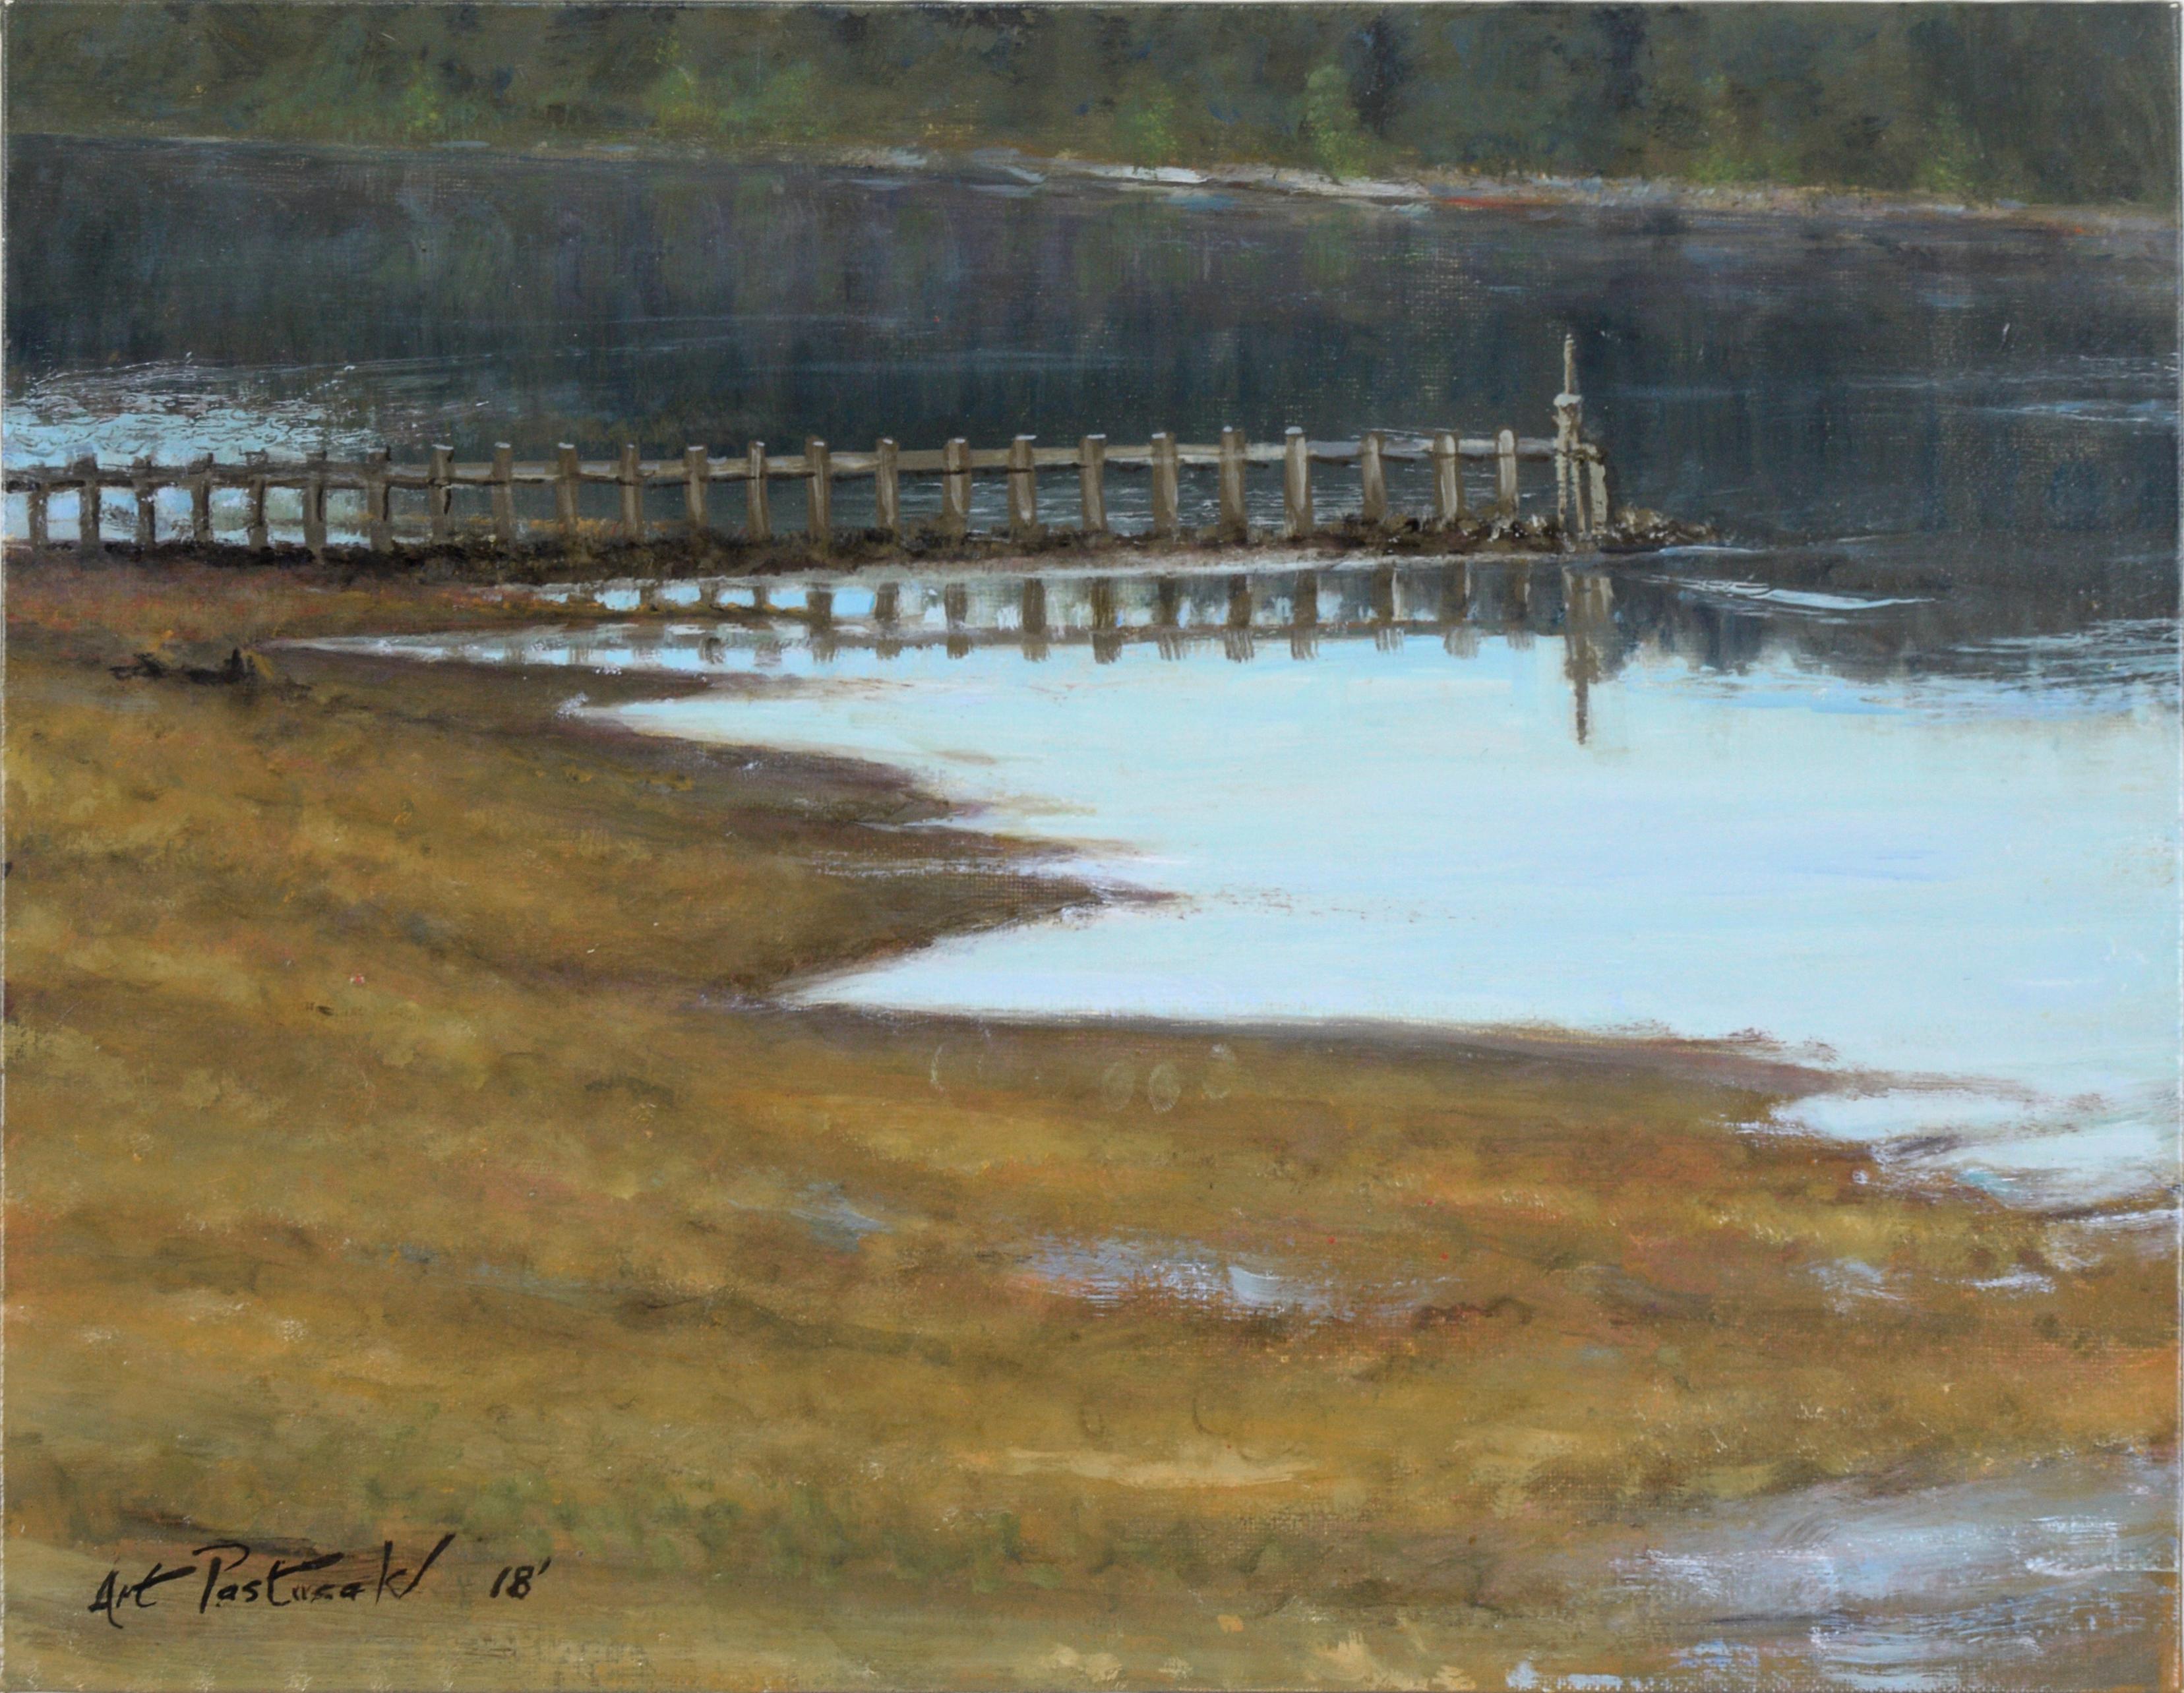 Art Pastusak Landscape Painting - "Solitude" - Dock on the Lake - Landscape in Oil on Artist's Board